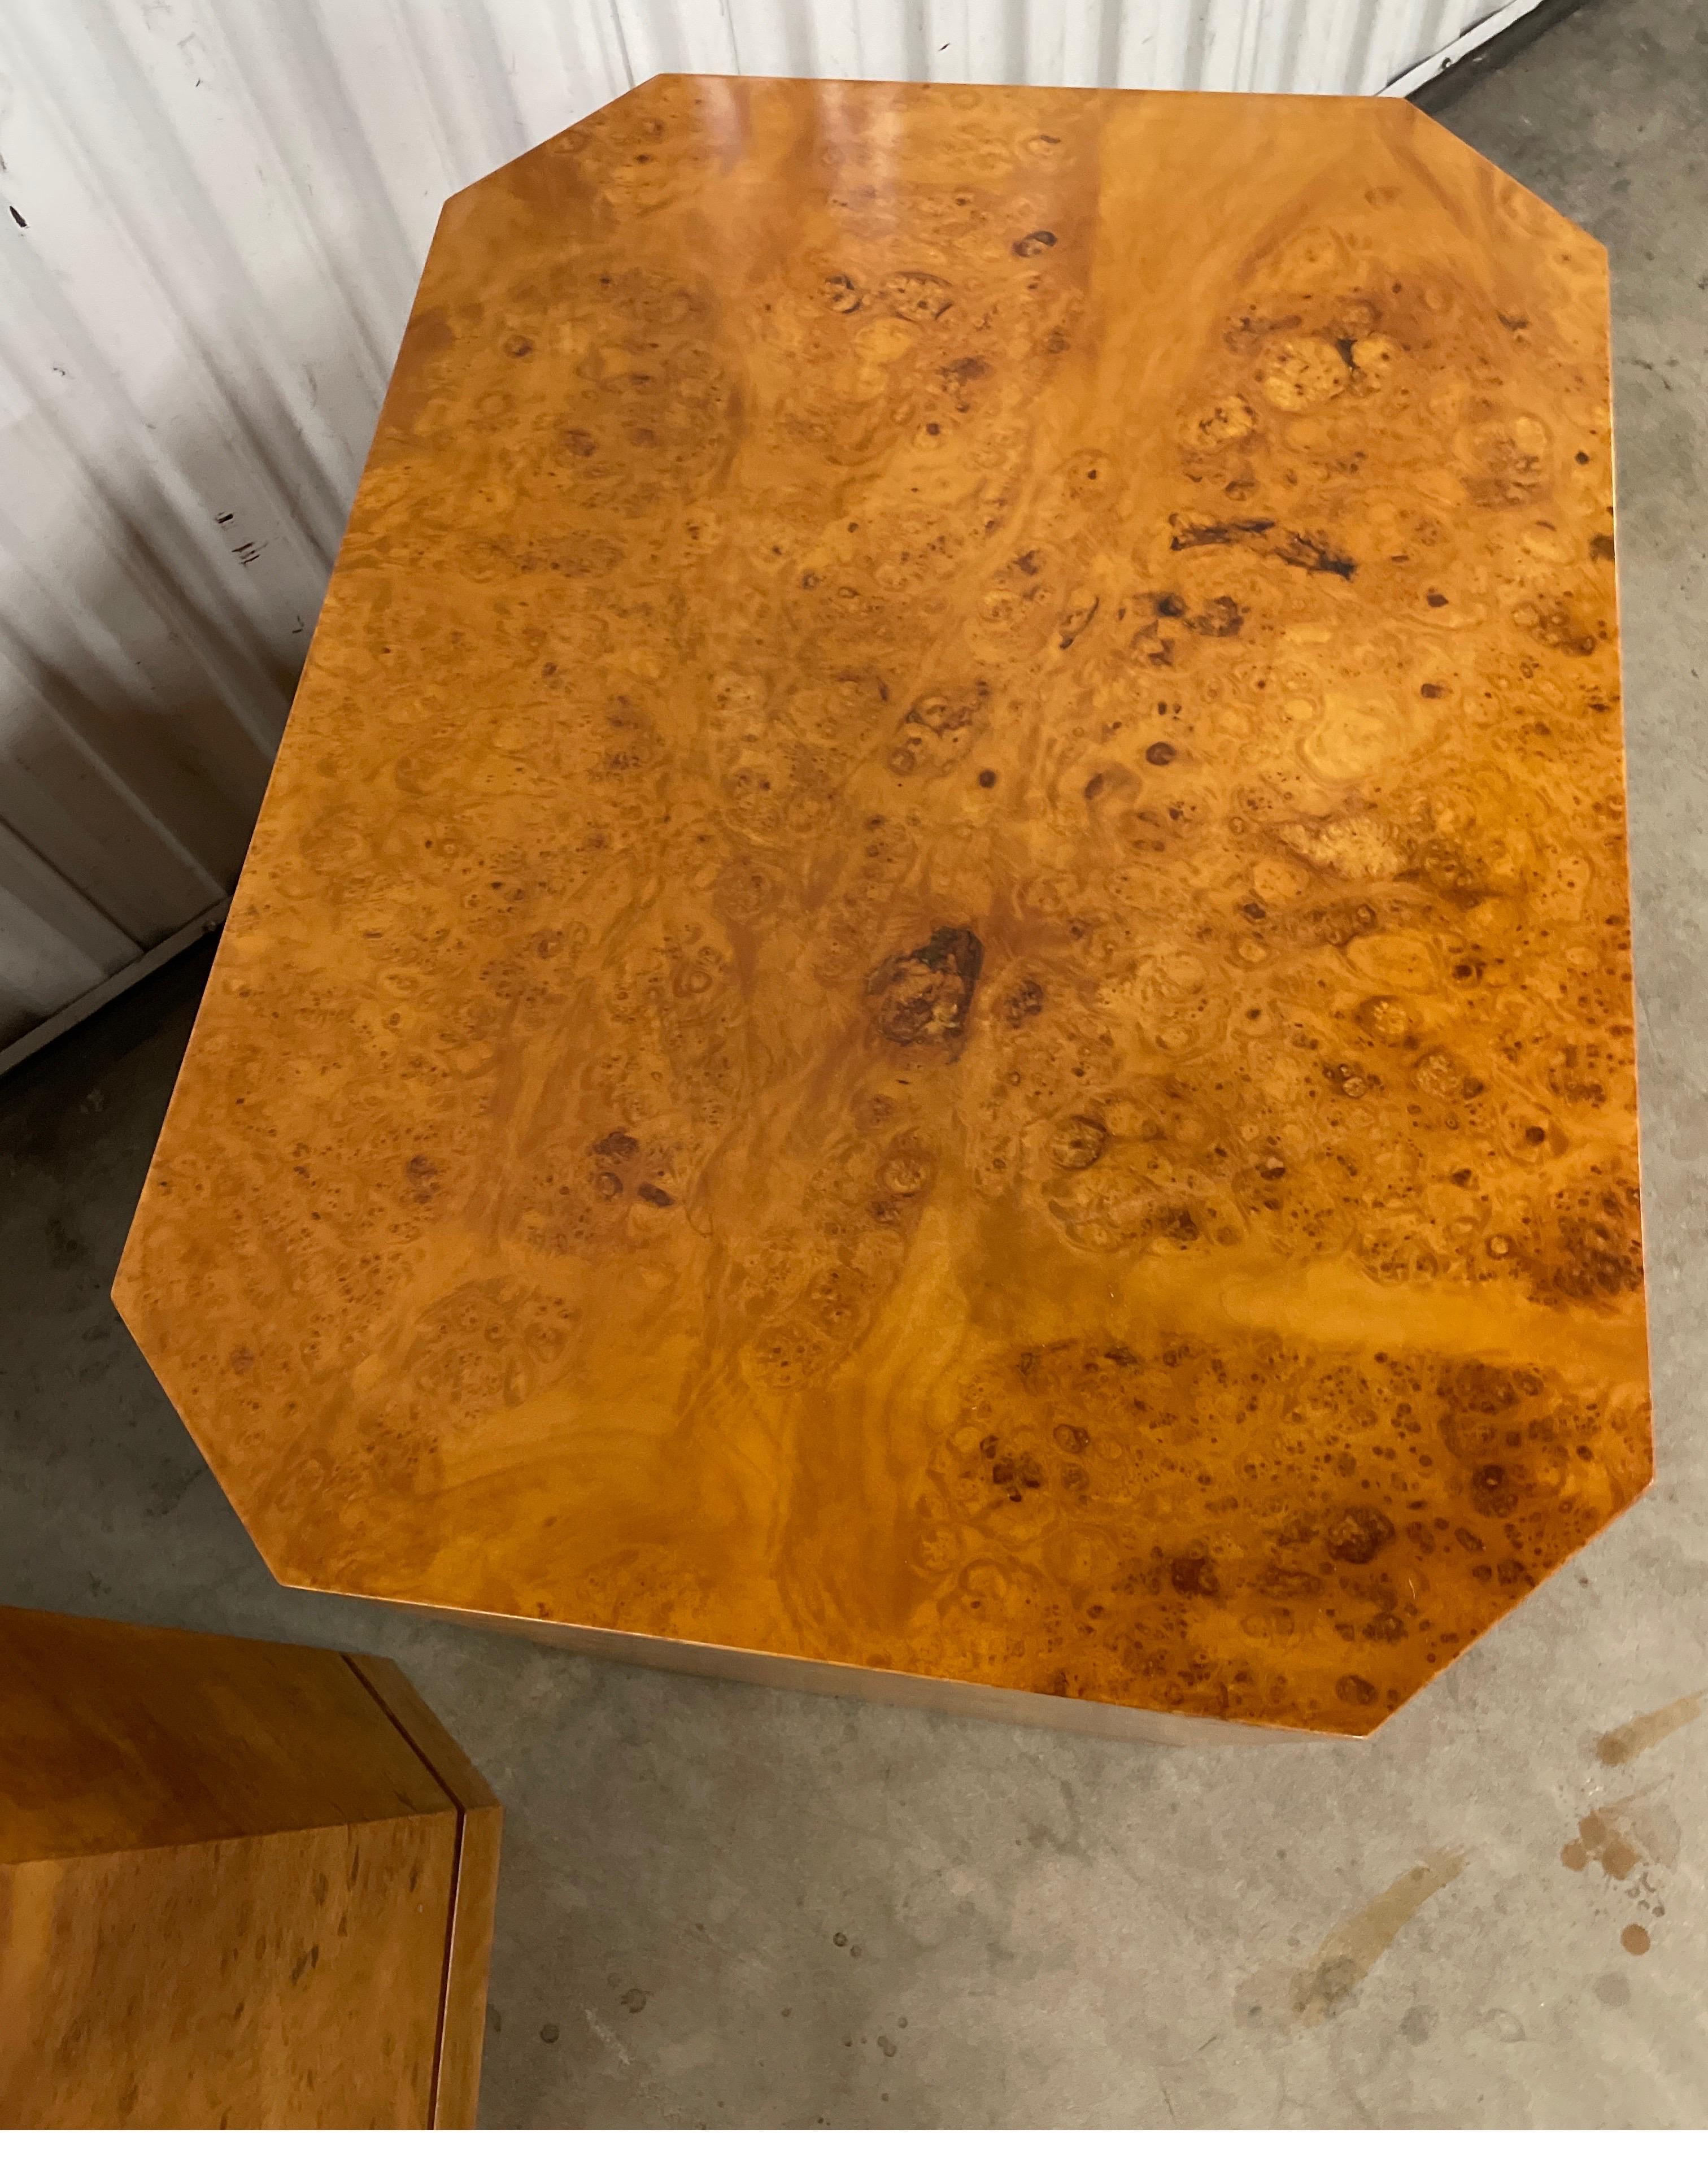 burl wood side table